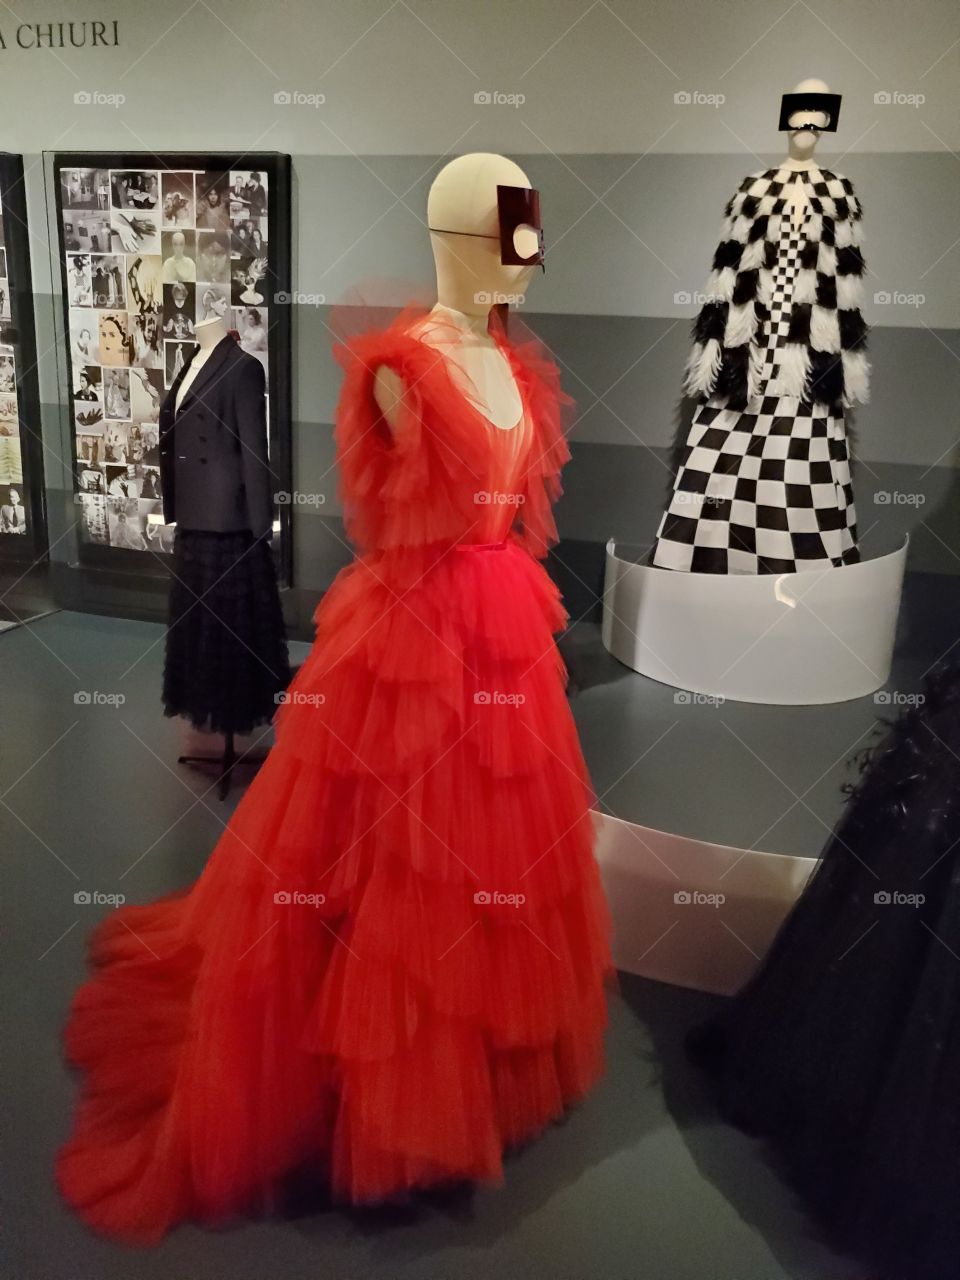 Dior Famous Dresses Dallas Museum of Art